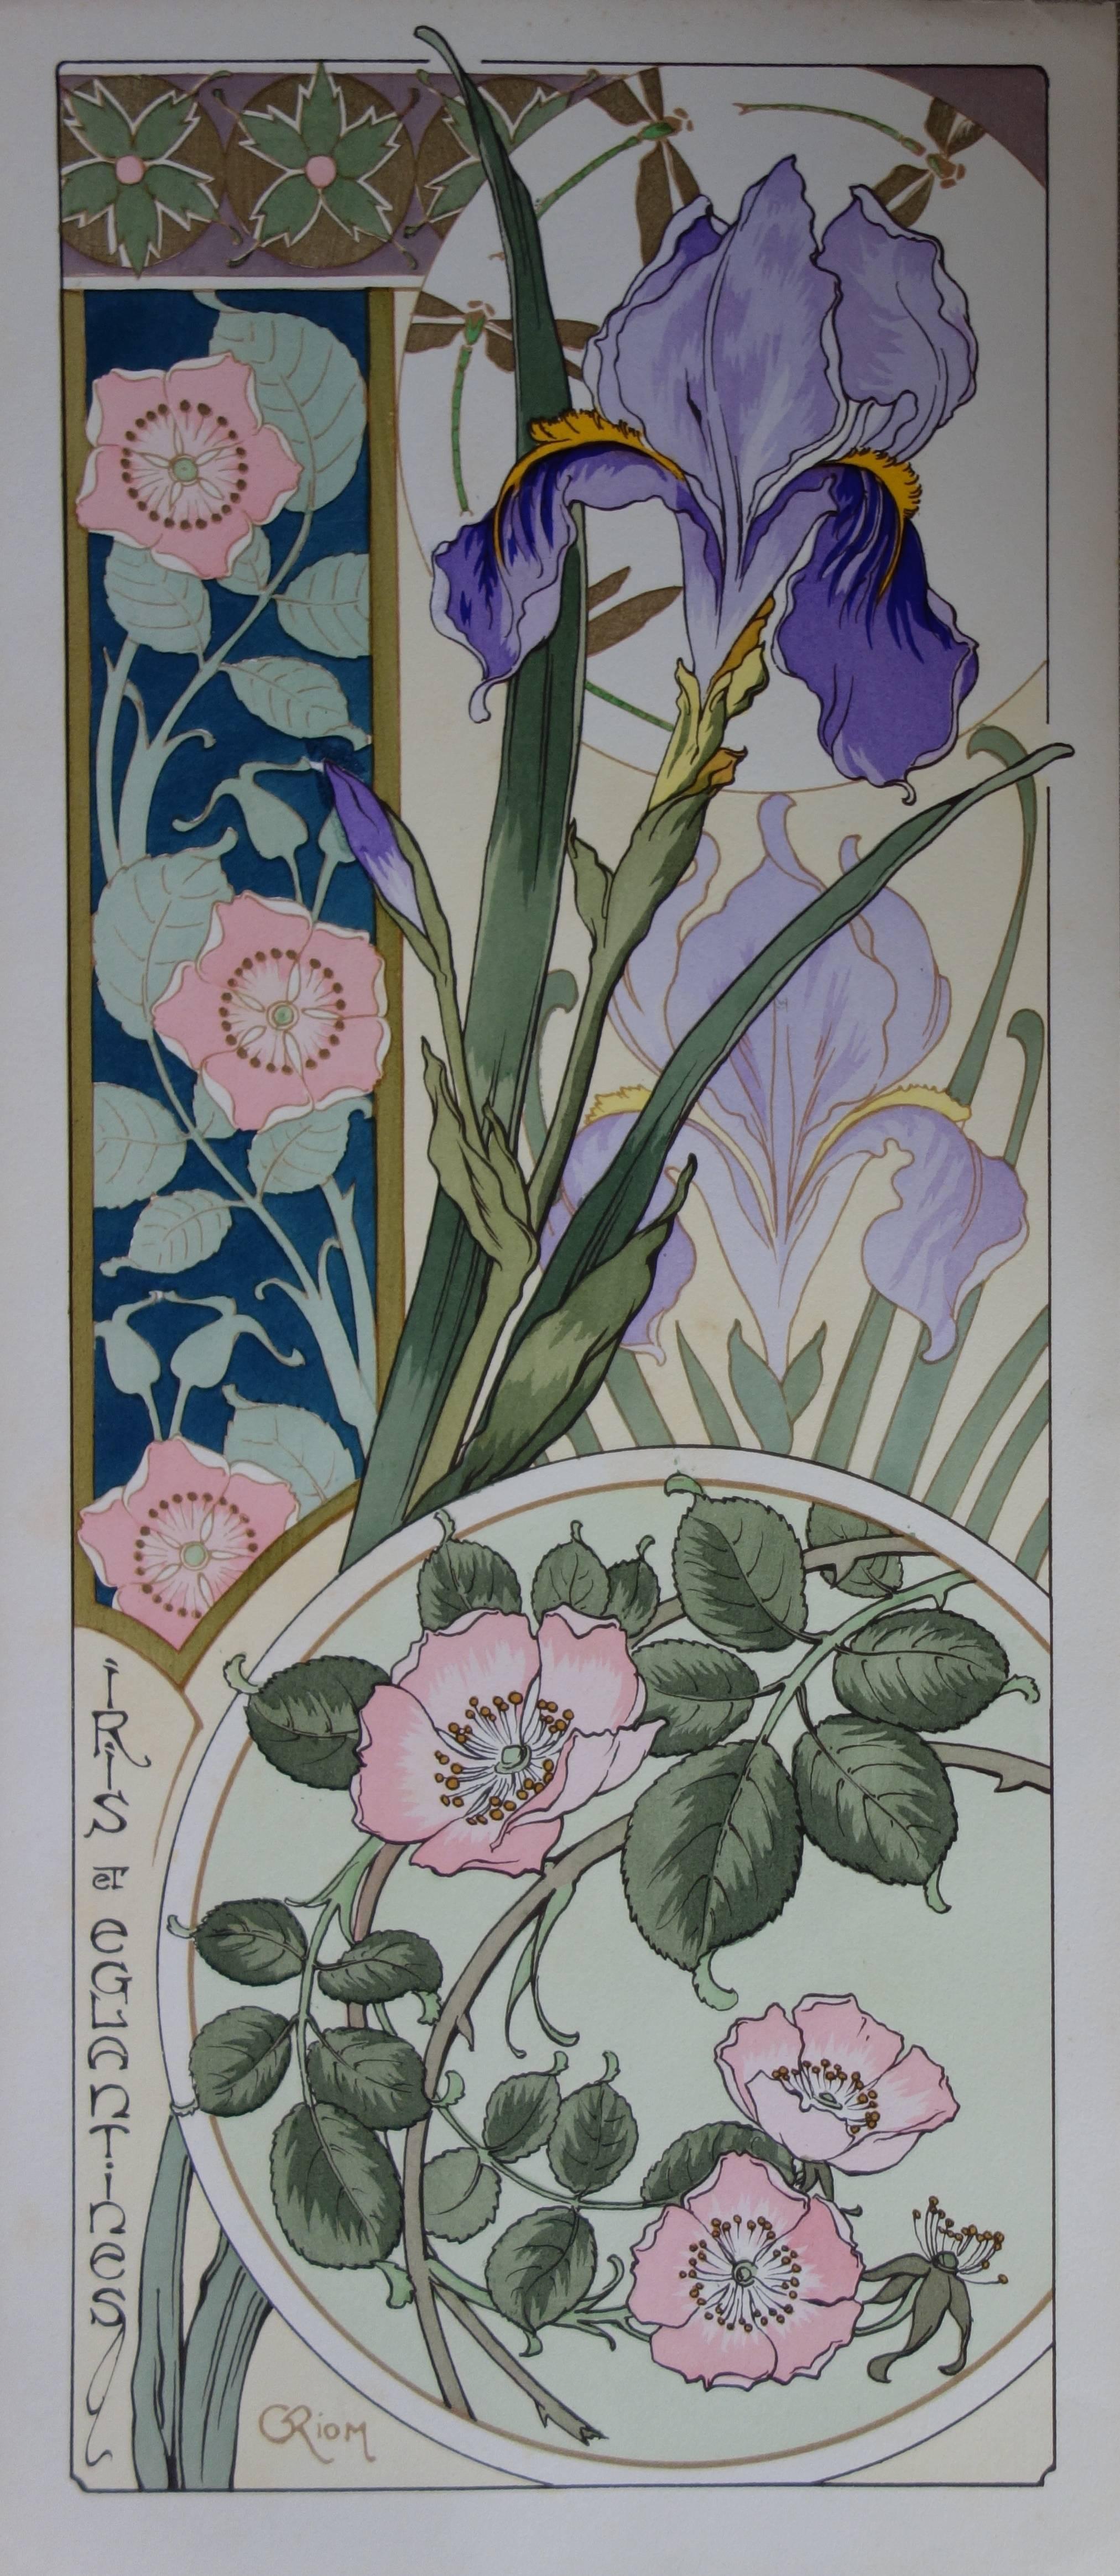 Unknown Interior Print - C RIOM : Irises And Rosehips - Original Lithograph - Art Nouveau 1890s